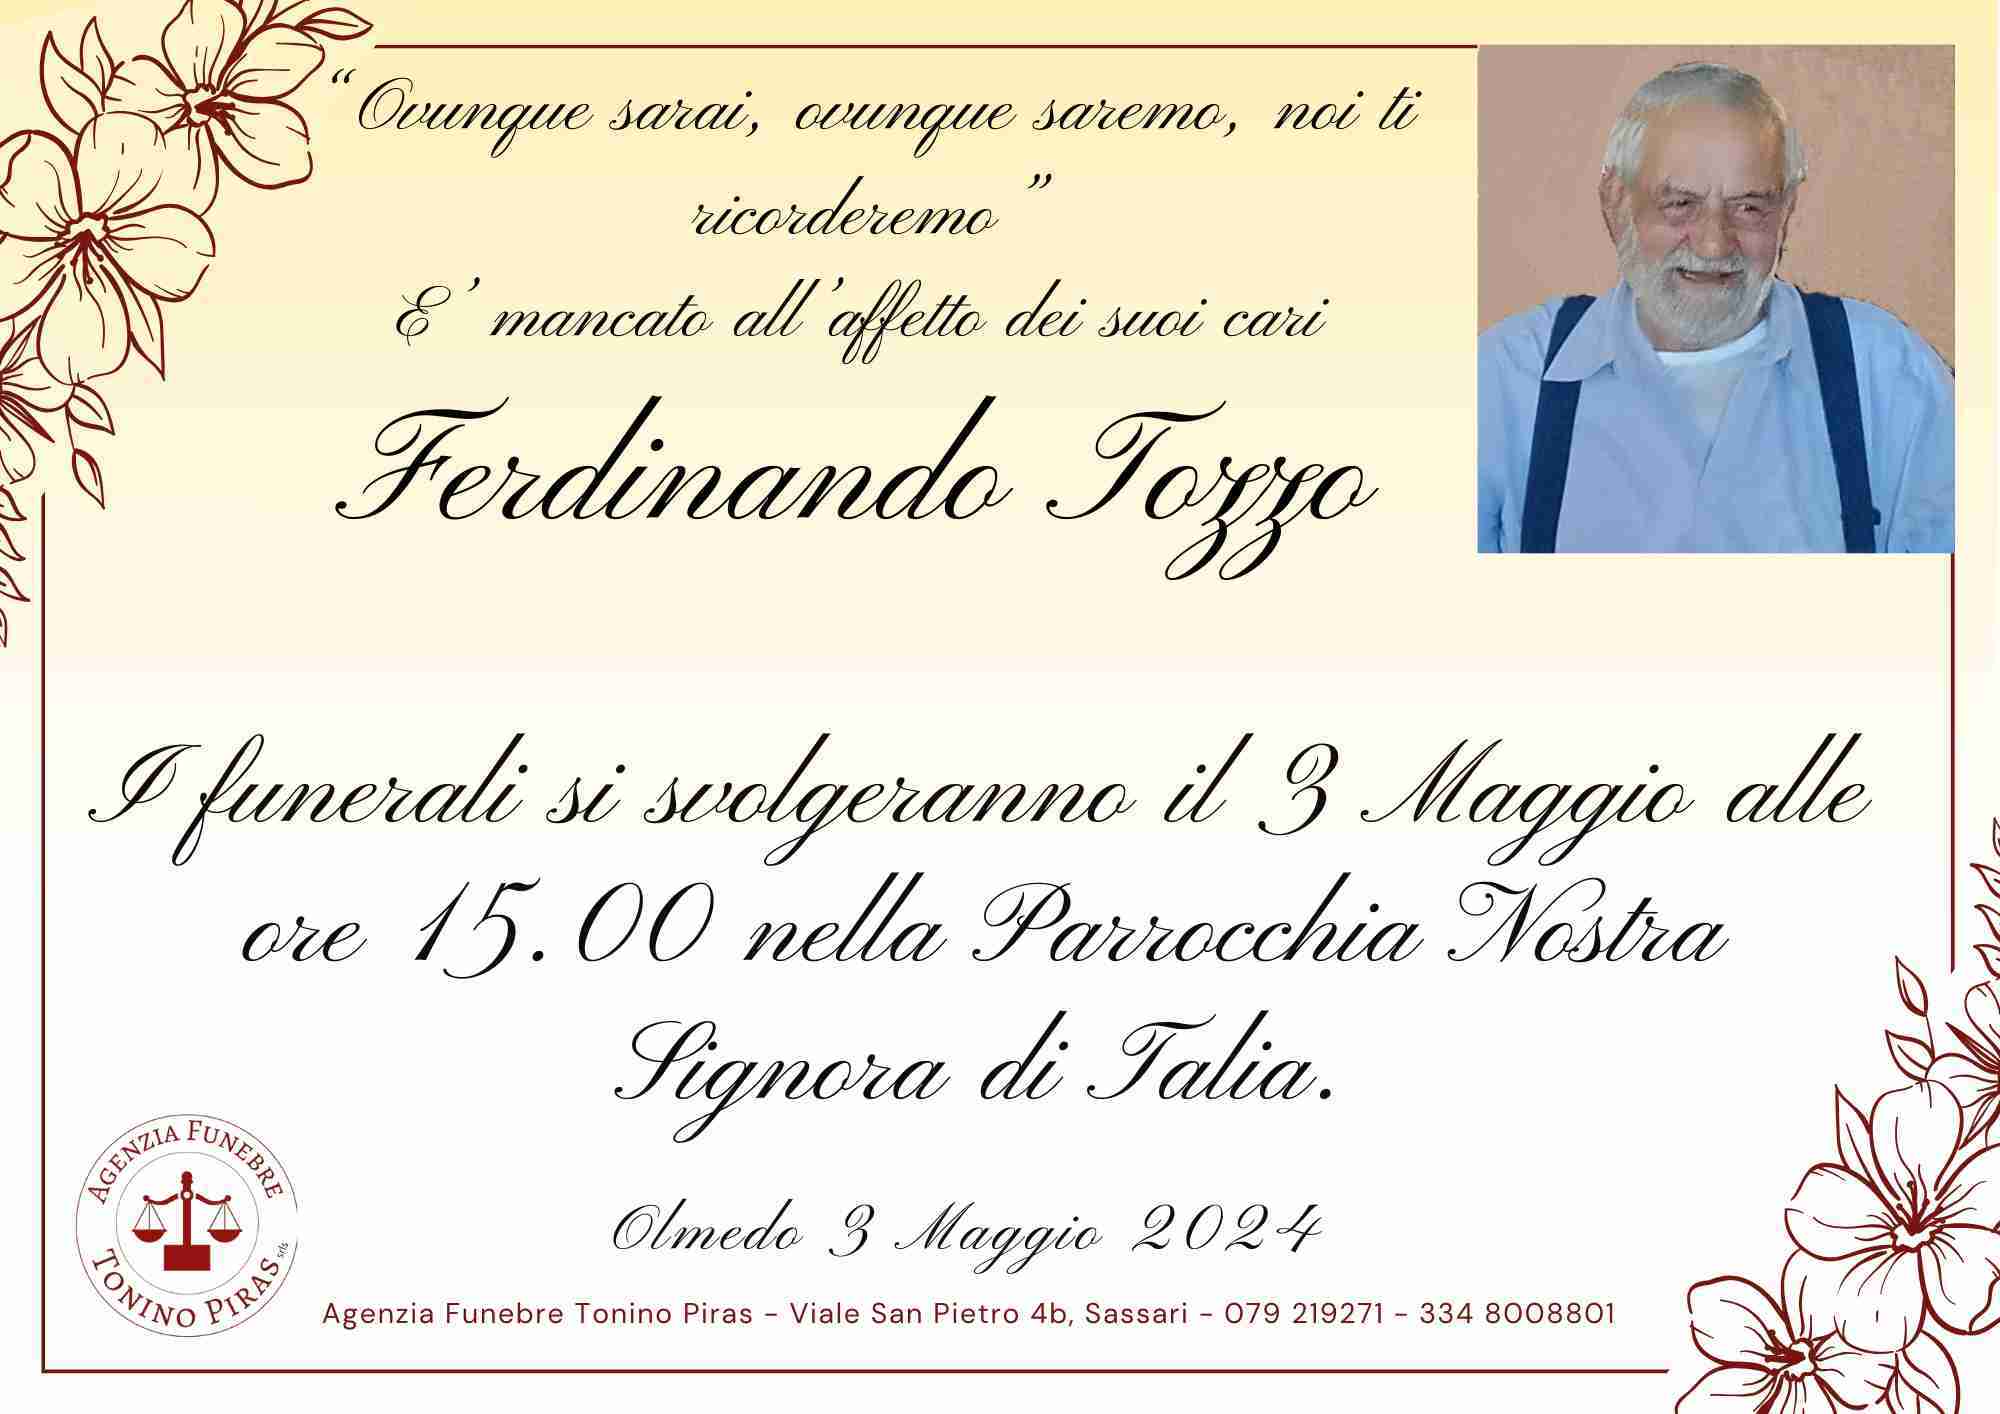 Ferdinando Tozzo